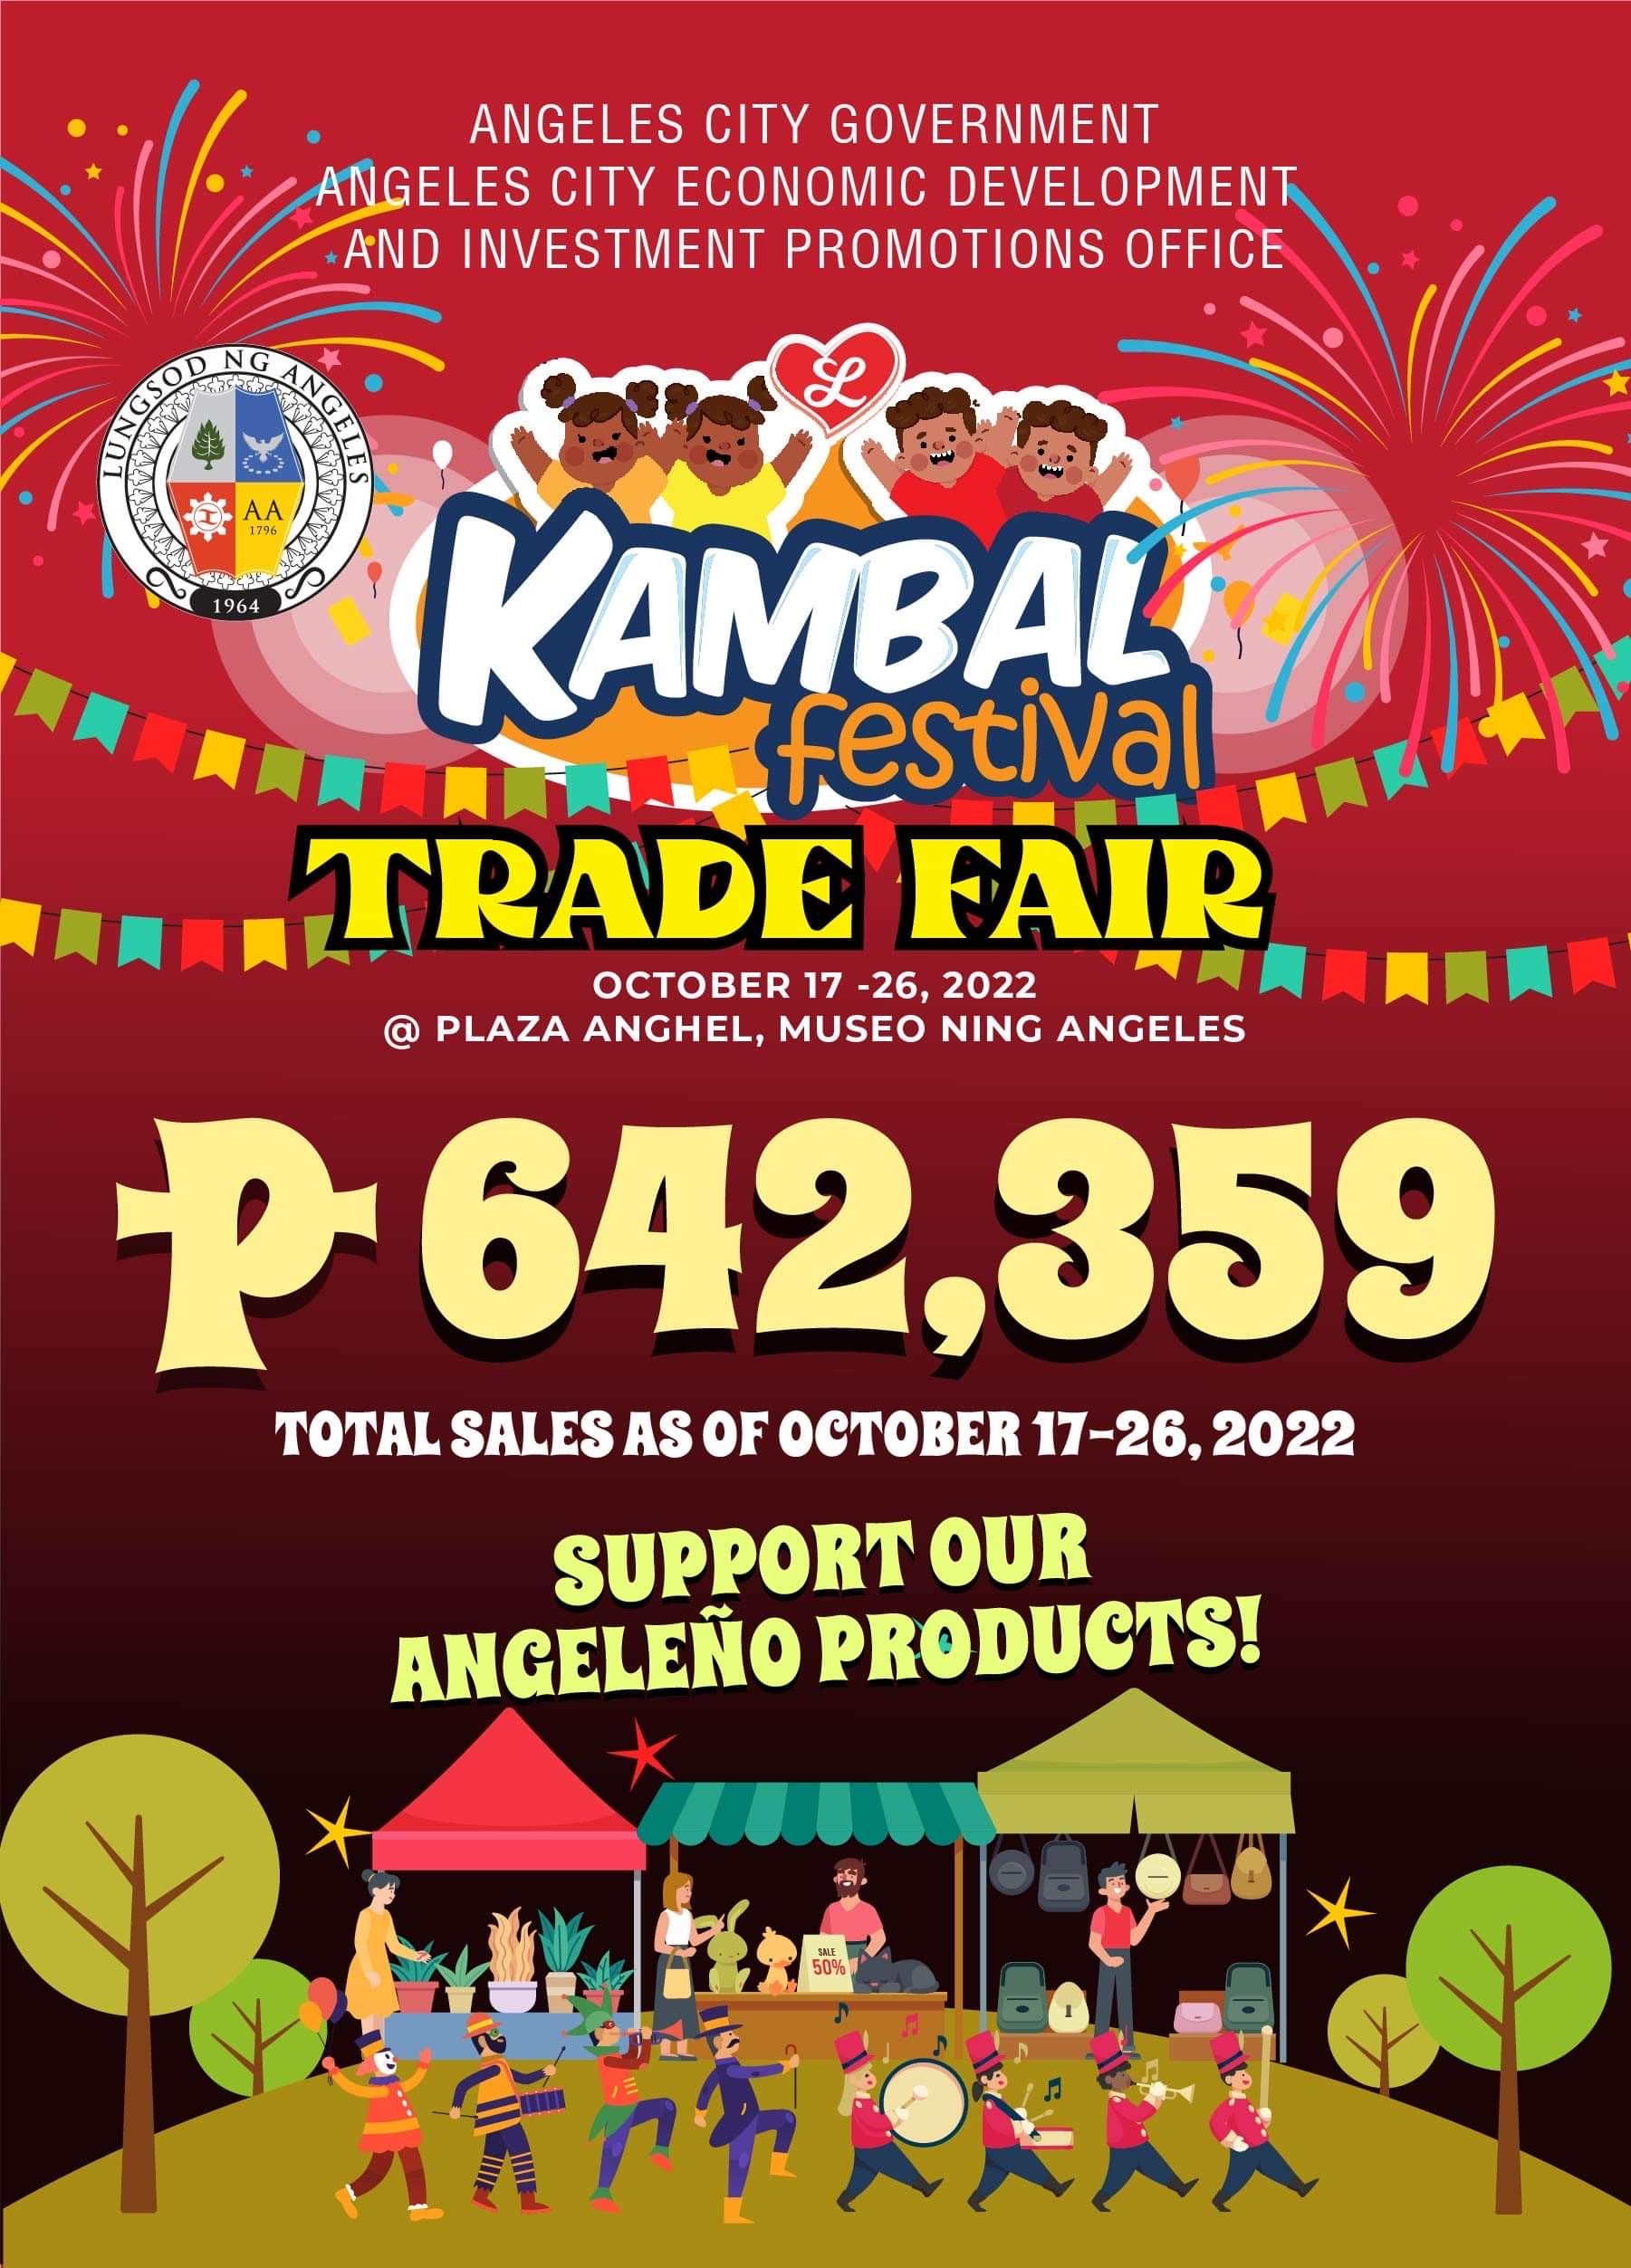 Ac Kambal Festival Trade Fair Closes With ₱642359 Earnings Iorbit News Online